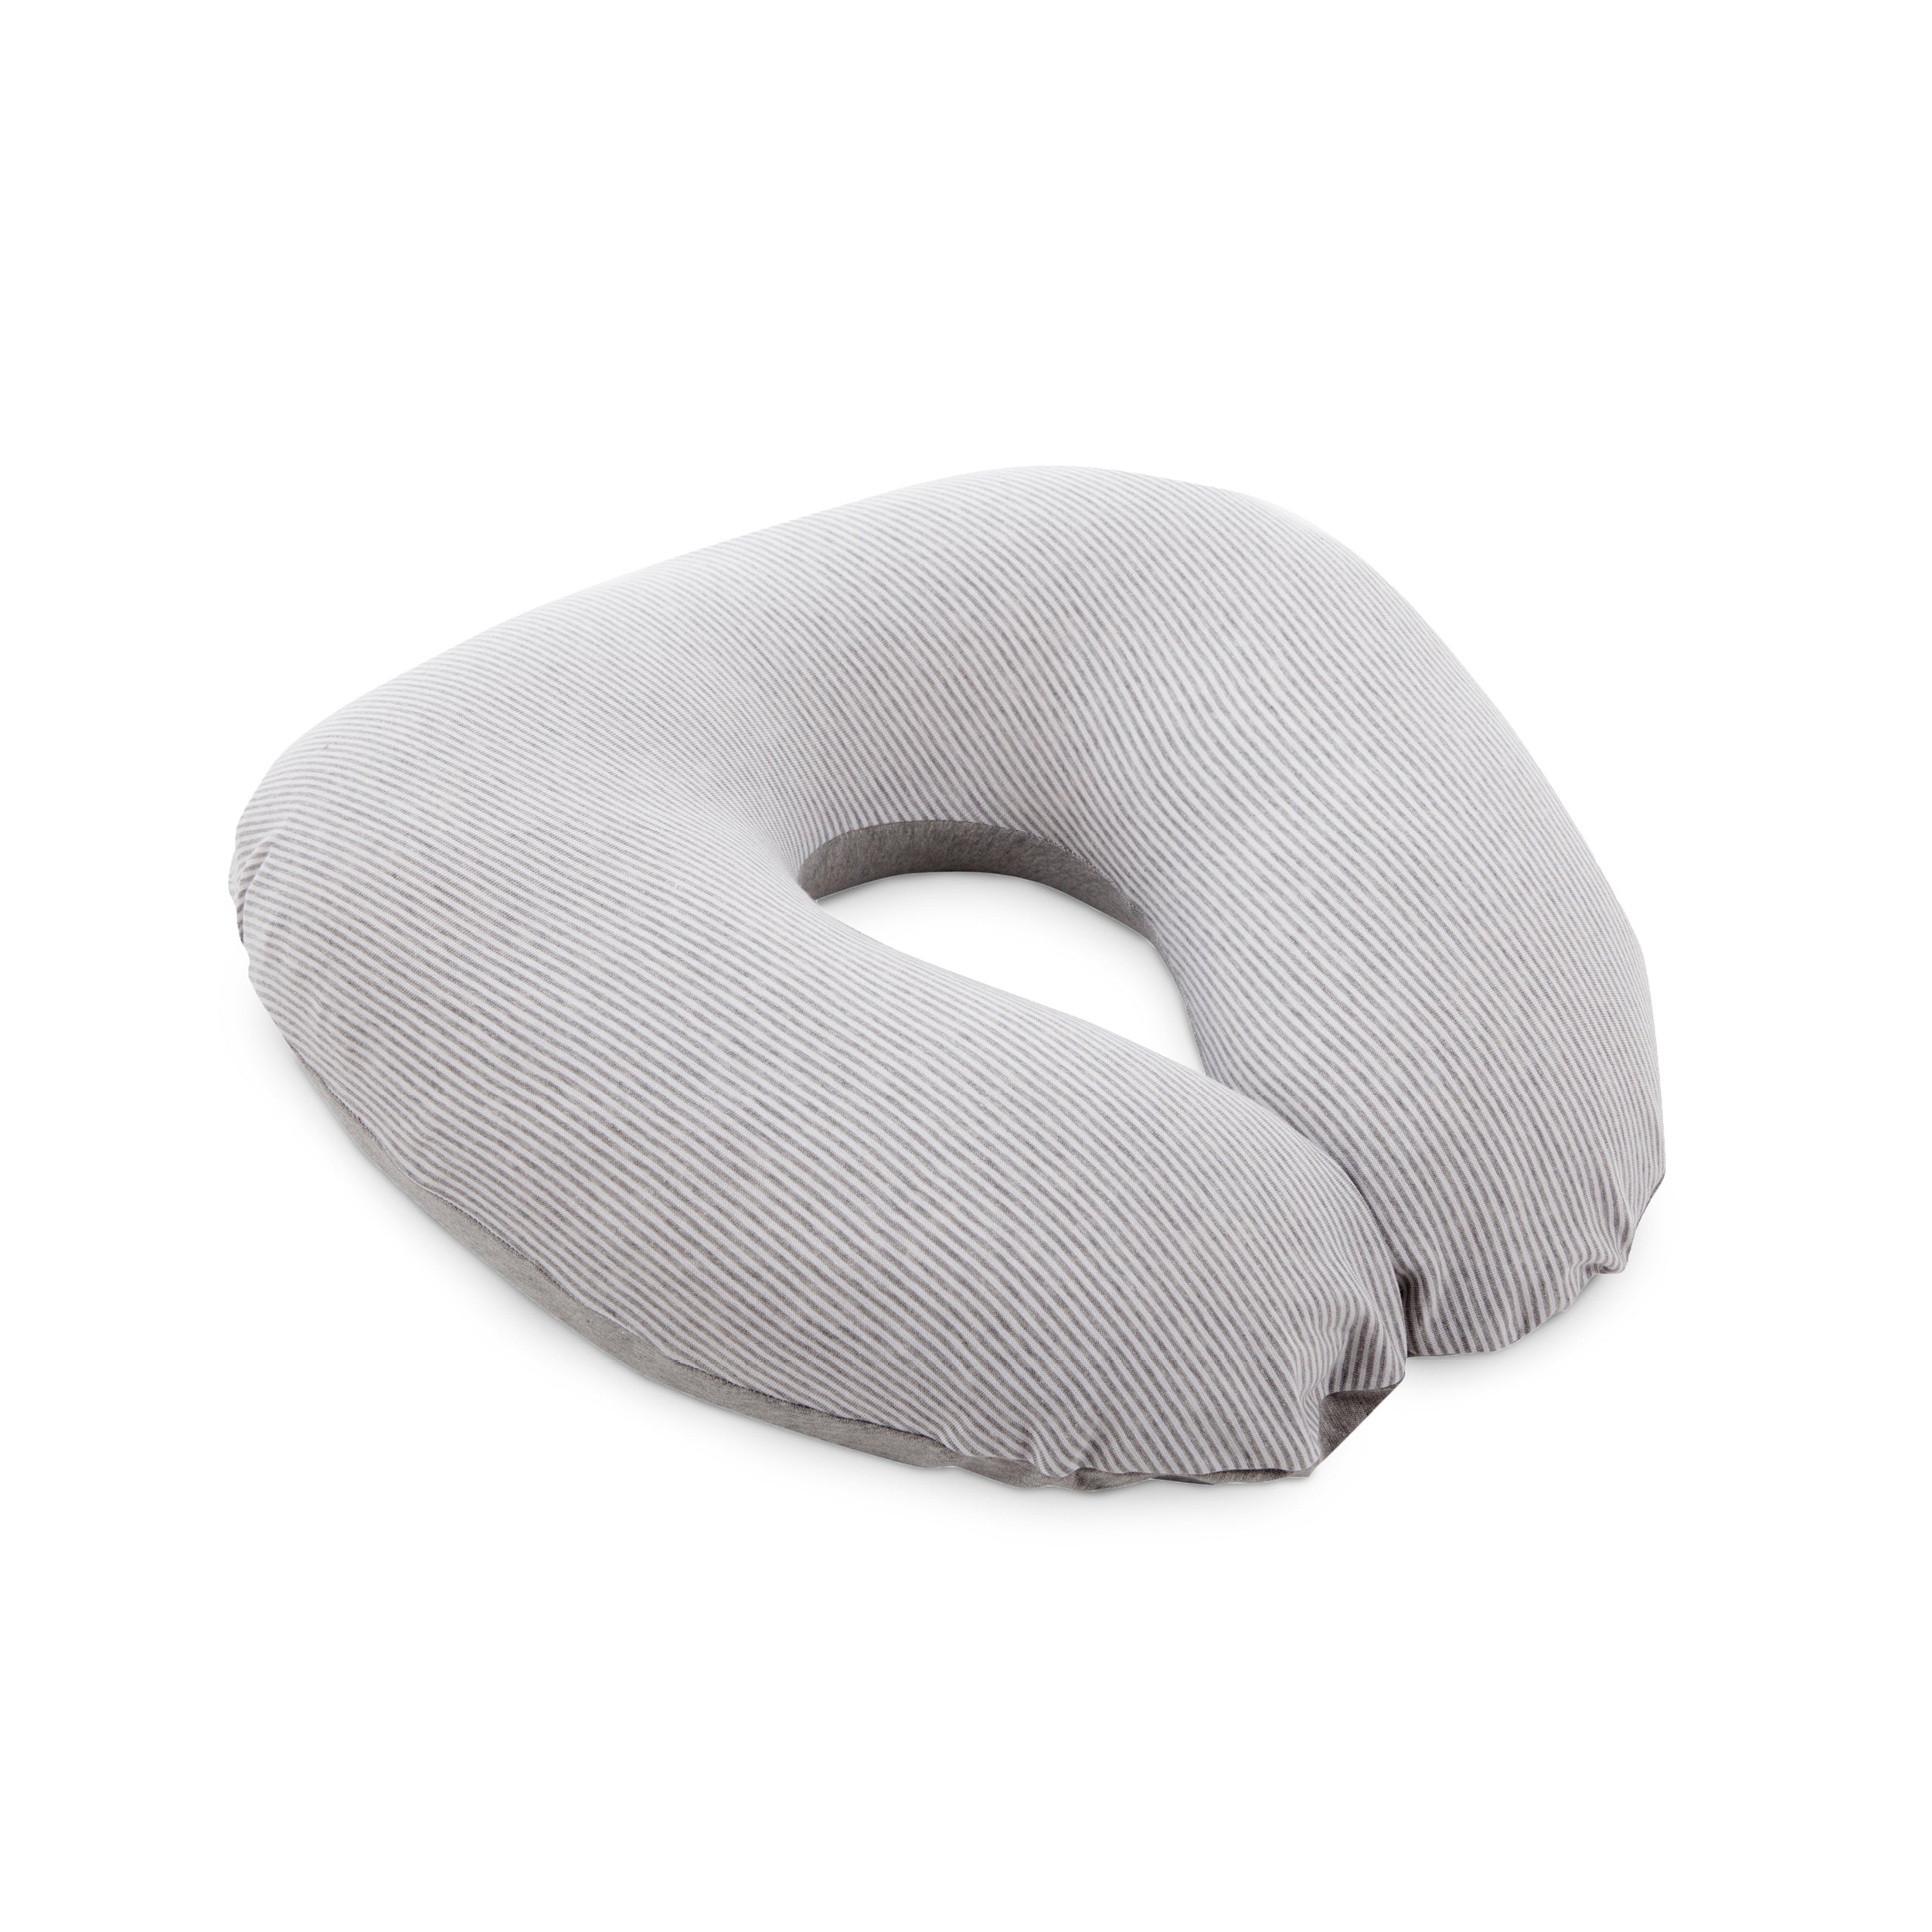 doomoo - Buddy - Classic Grey  One Organic Pillow, all the needs